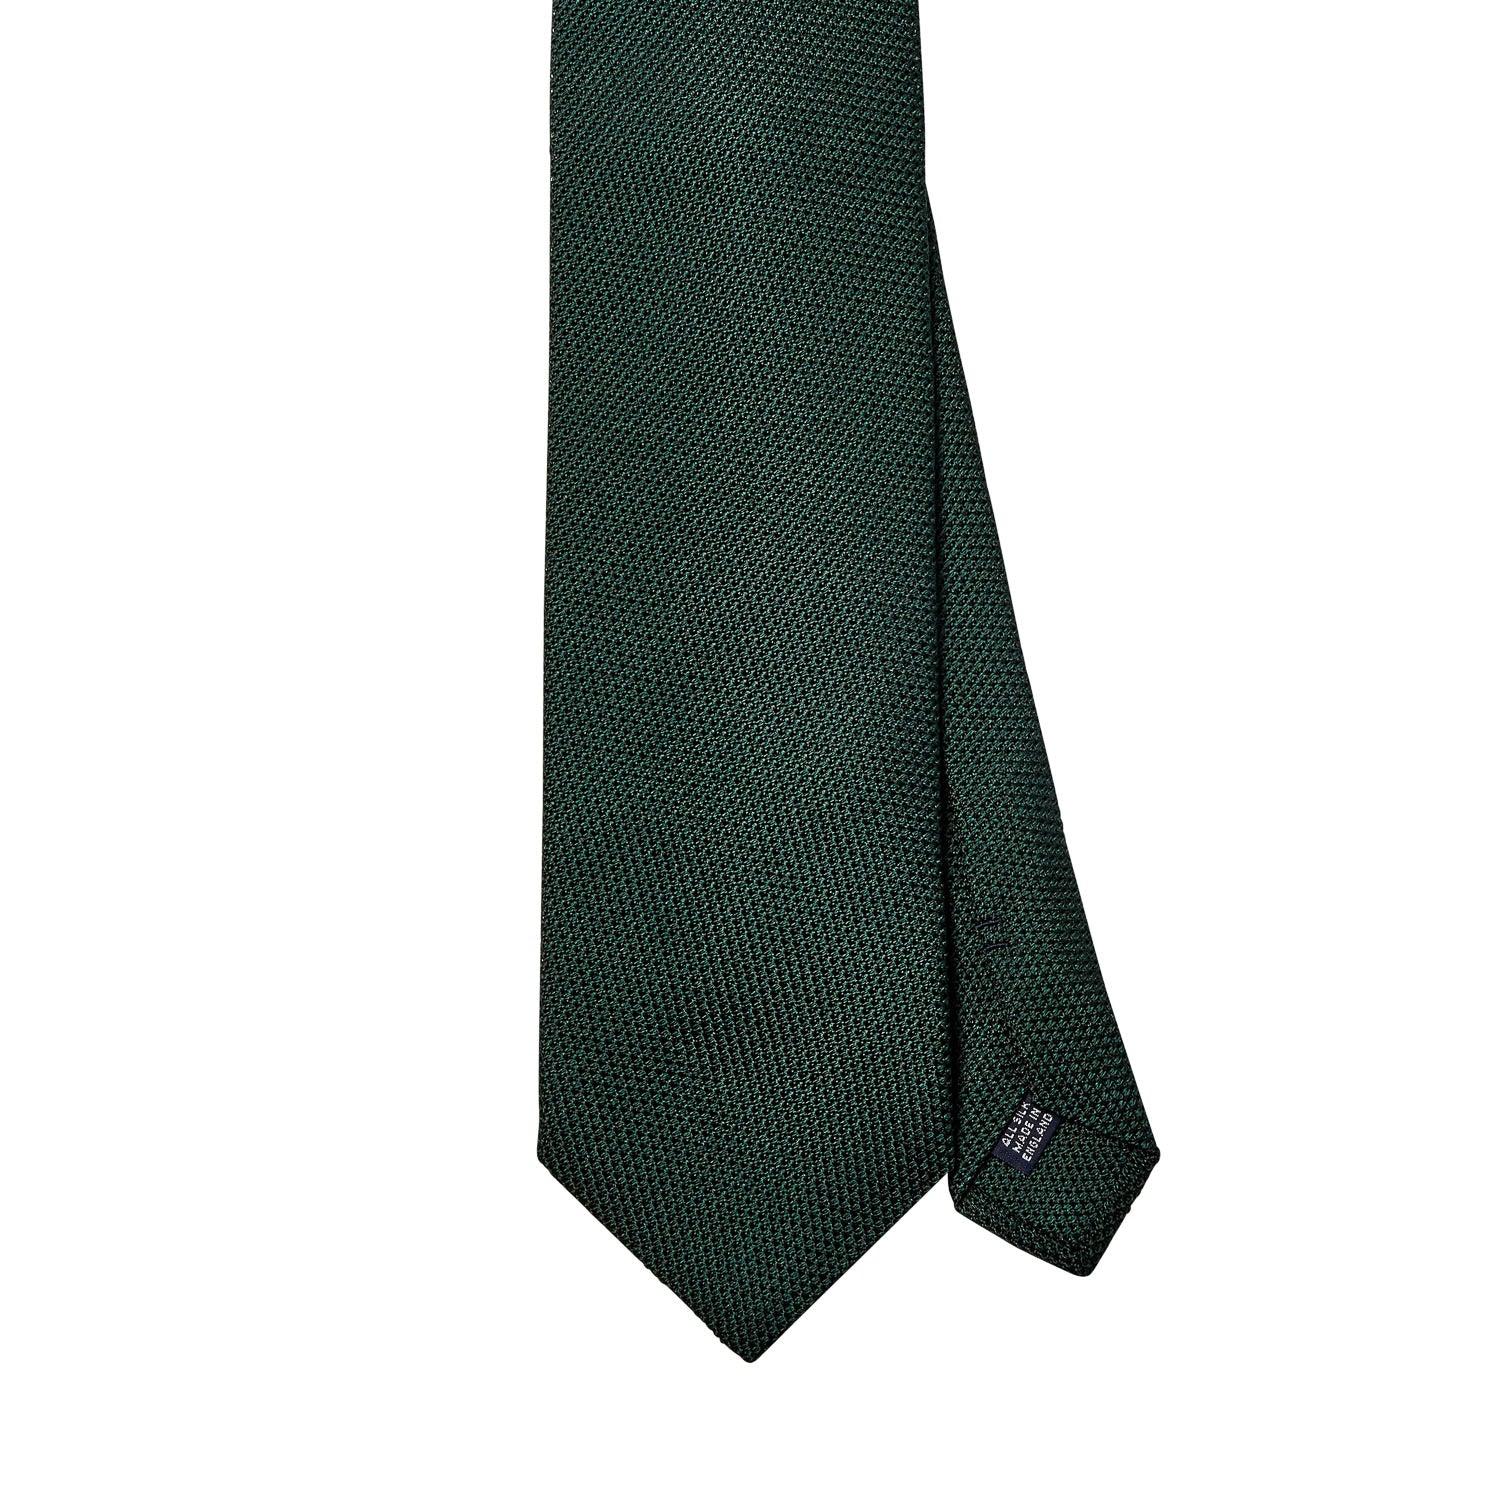 A high quality, handmade Sovereign Grade Grenadine Fina Emerald Tie from KirbyAllison.com.